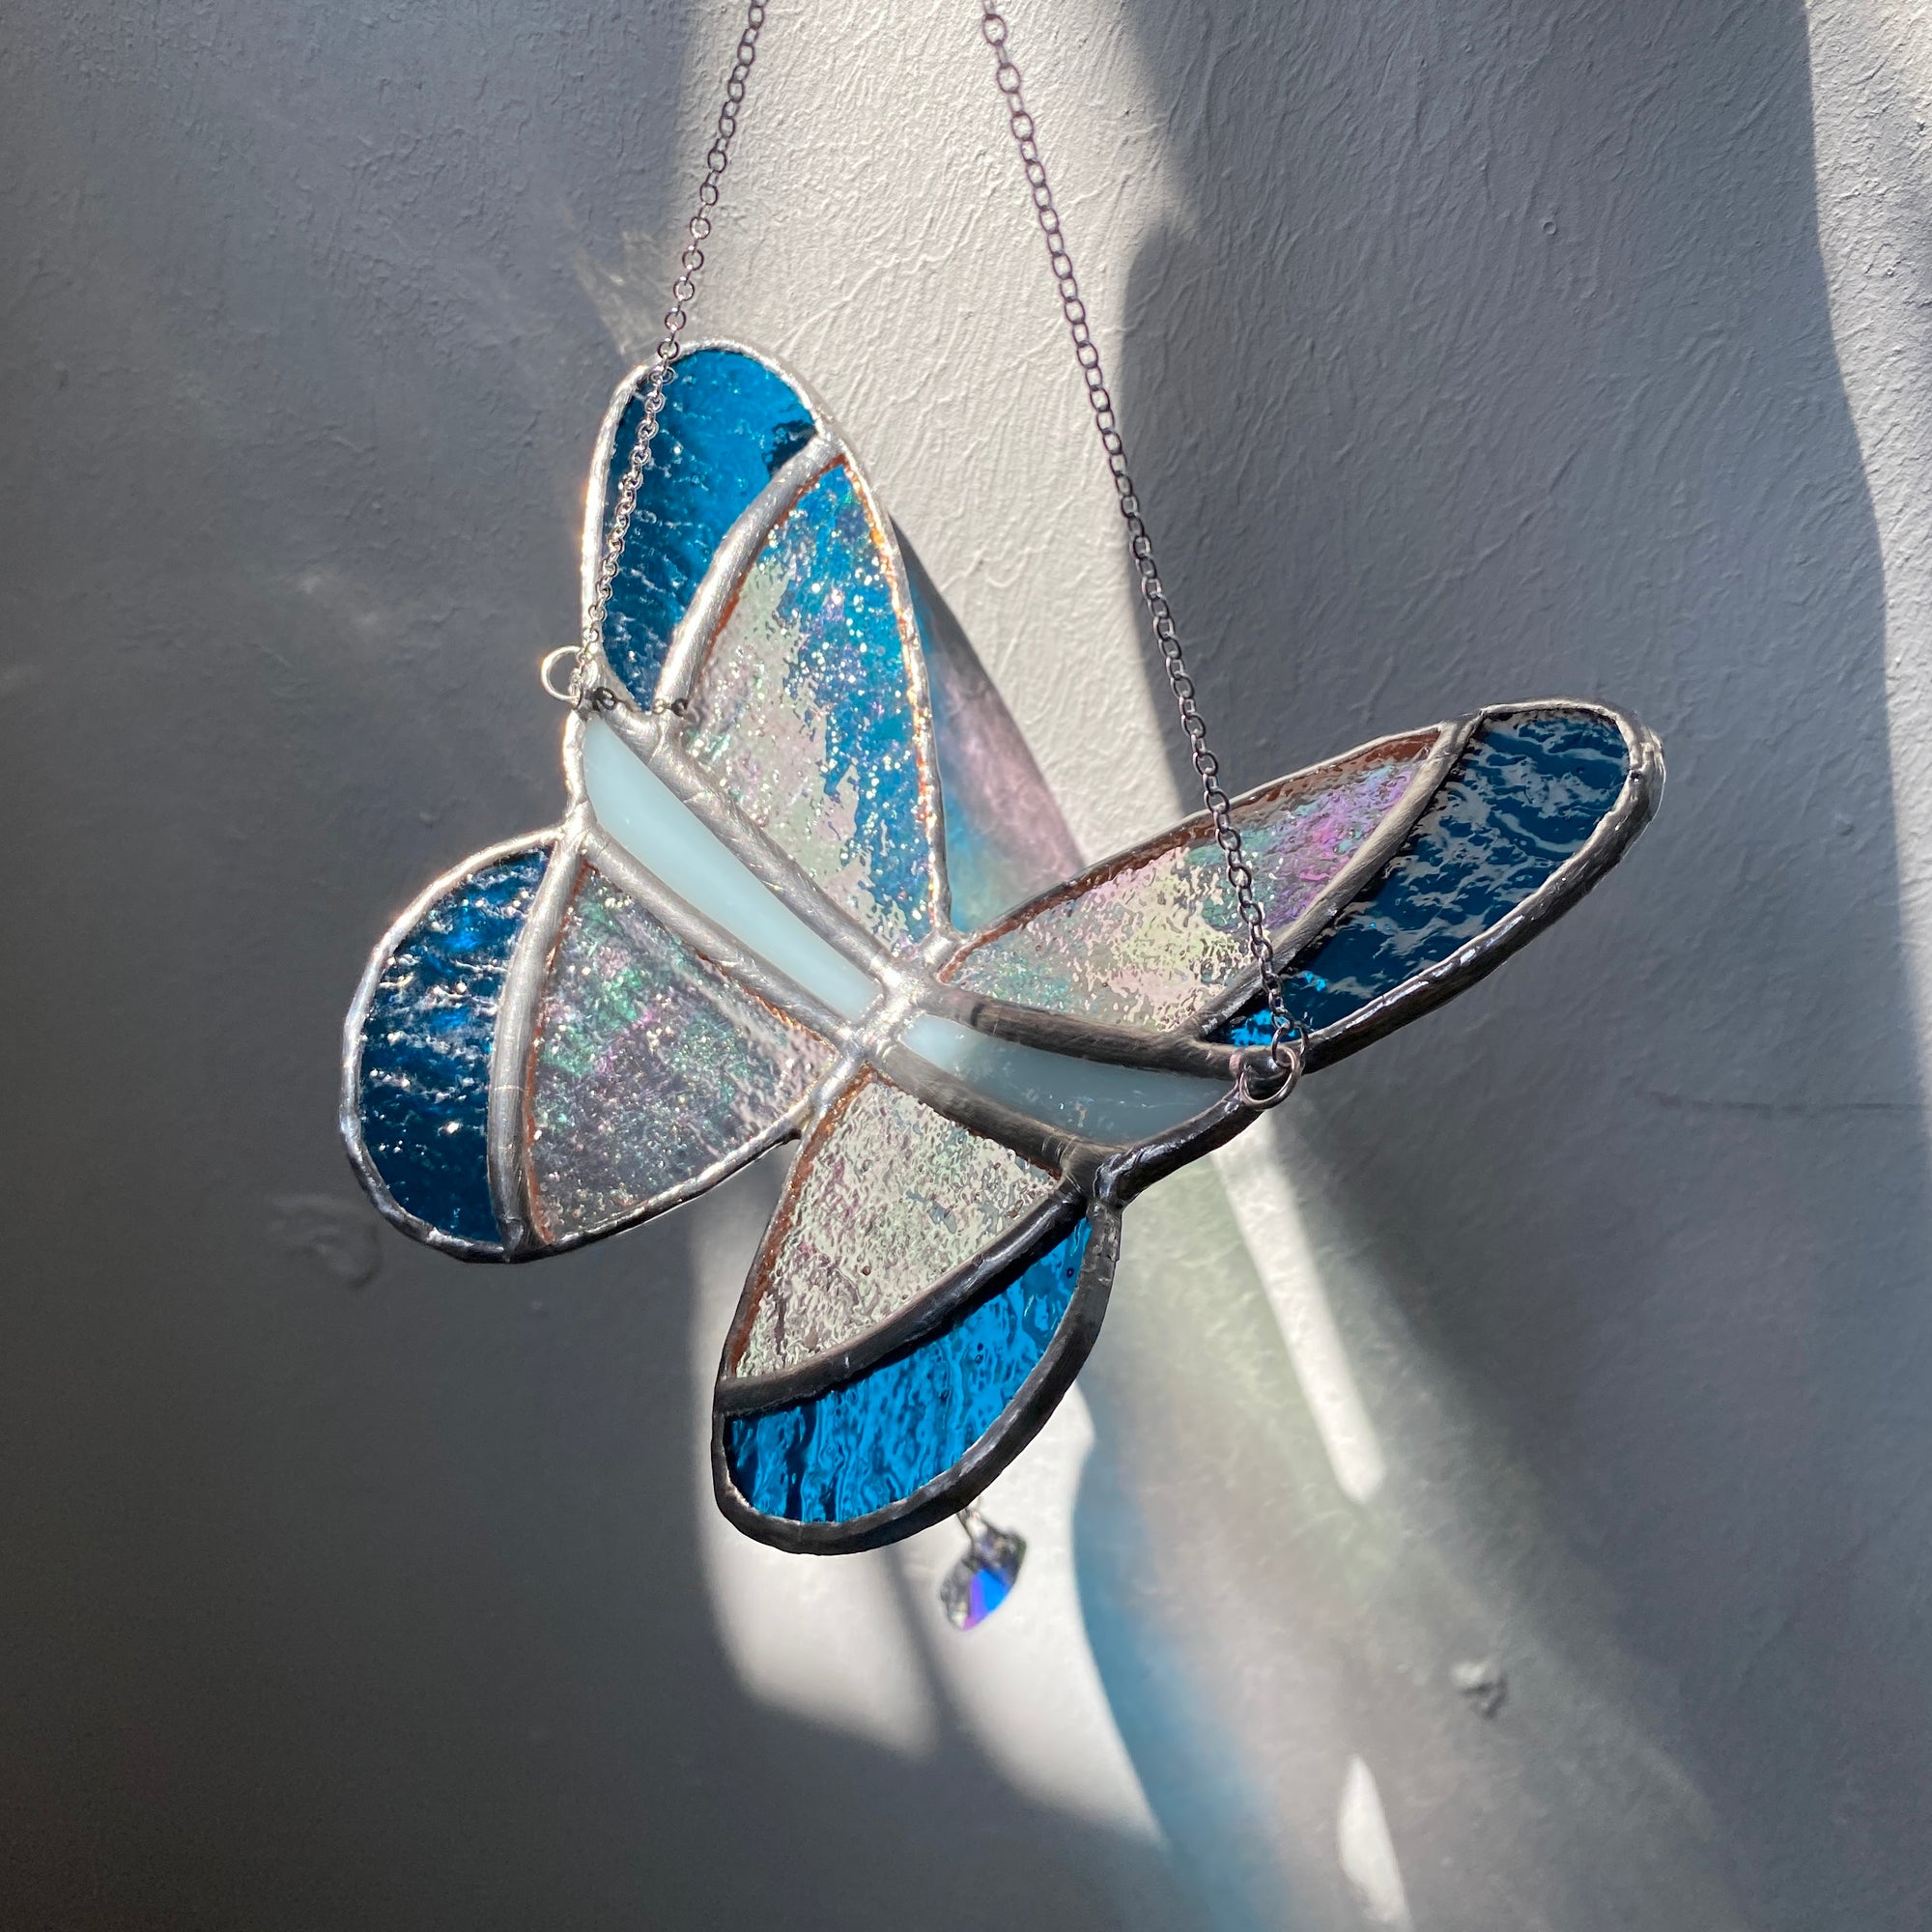 玻璃飾物工作坊 - 水棱鏡 Stained Glass Workshop - Sun-catcher